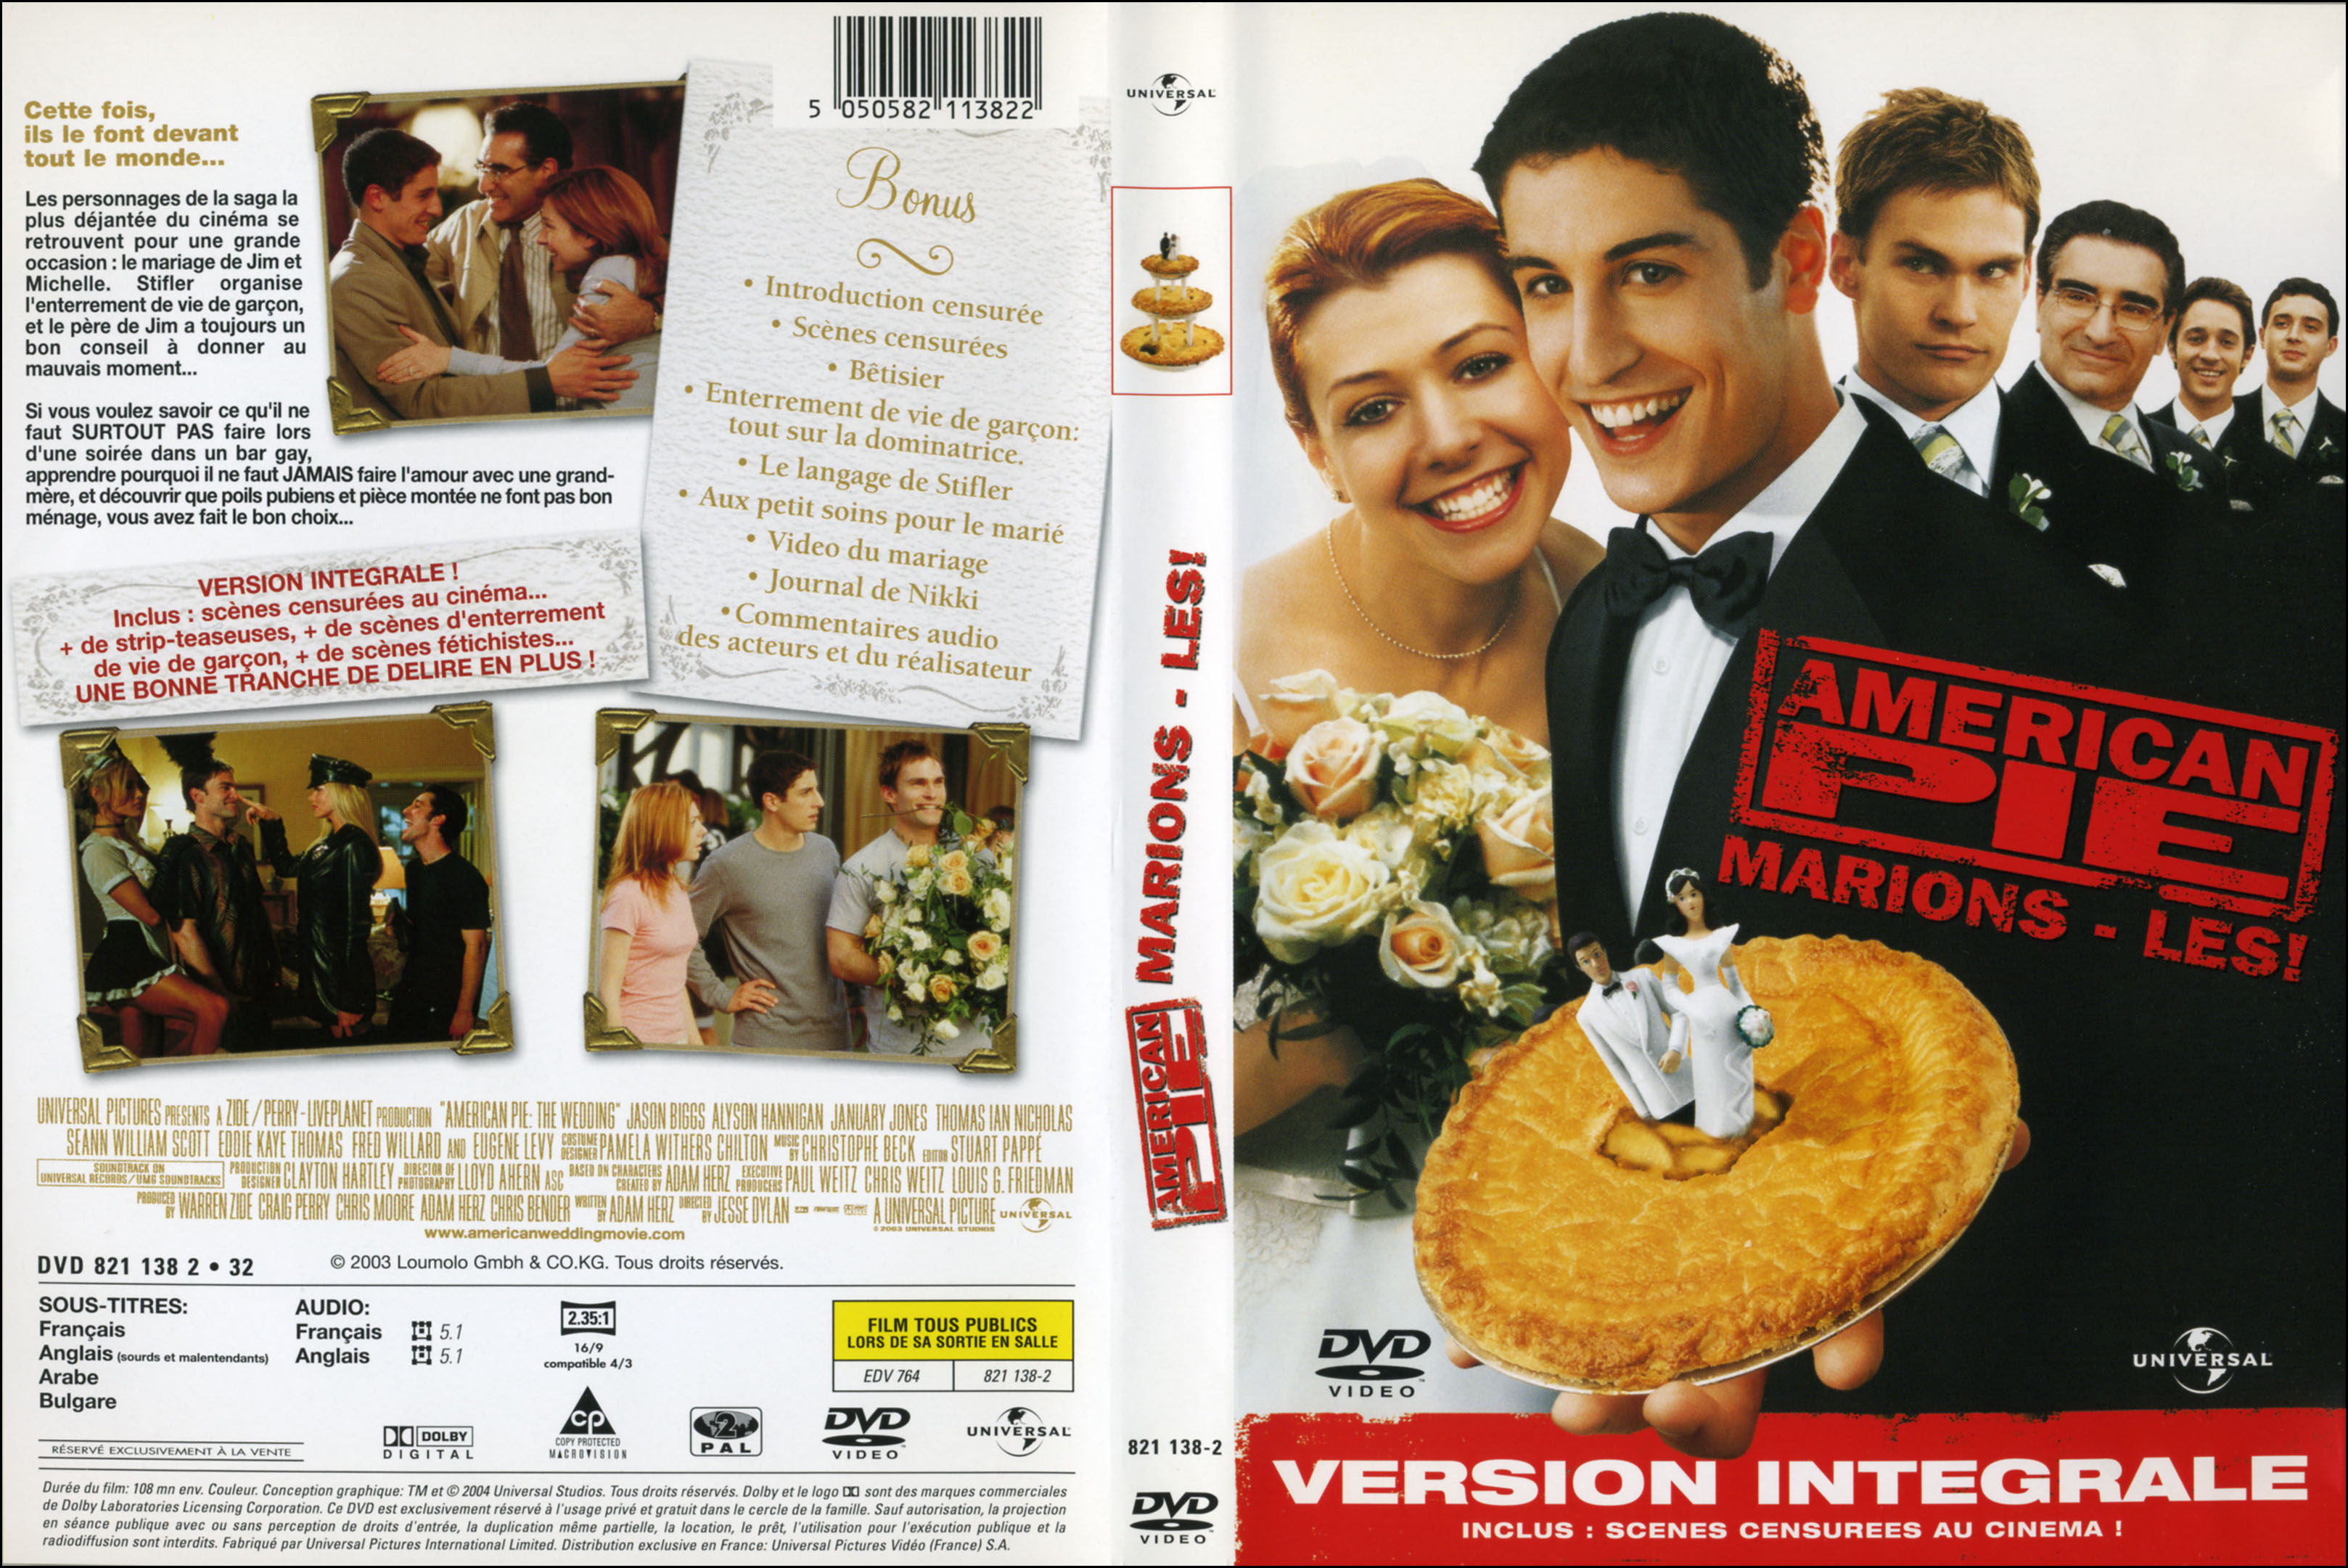 Jaquette DVD American Pie 3